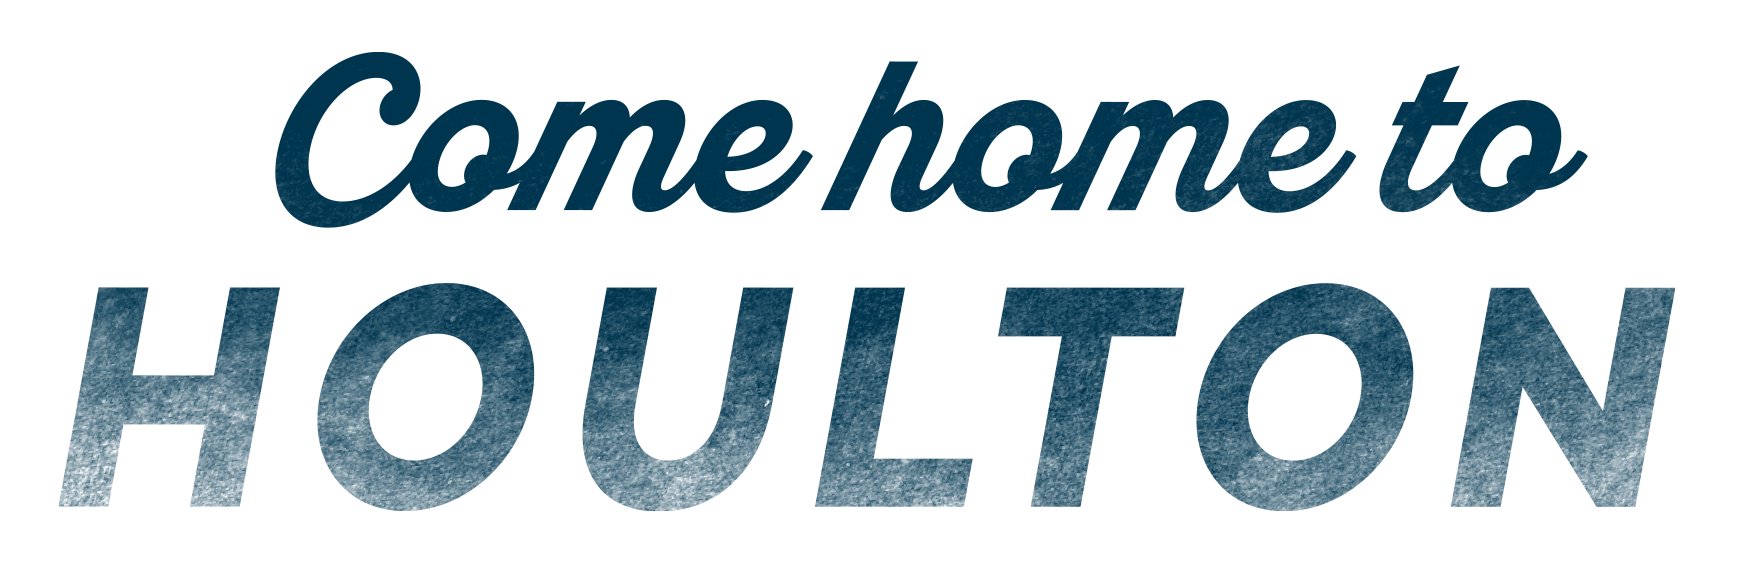 come-home-to-houlton-graduated-logo-night-sky